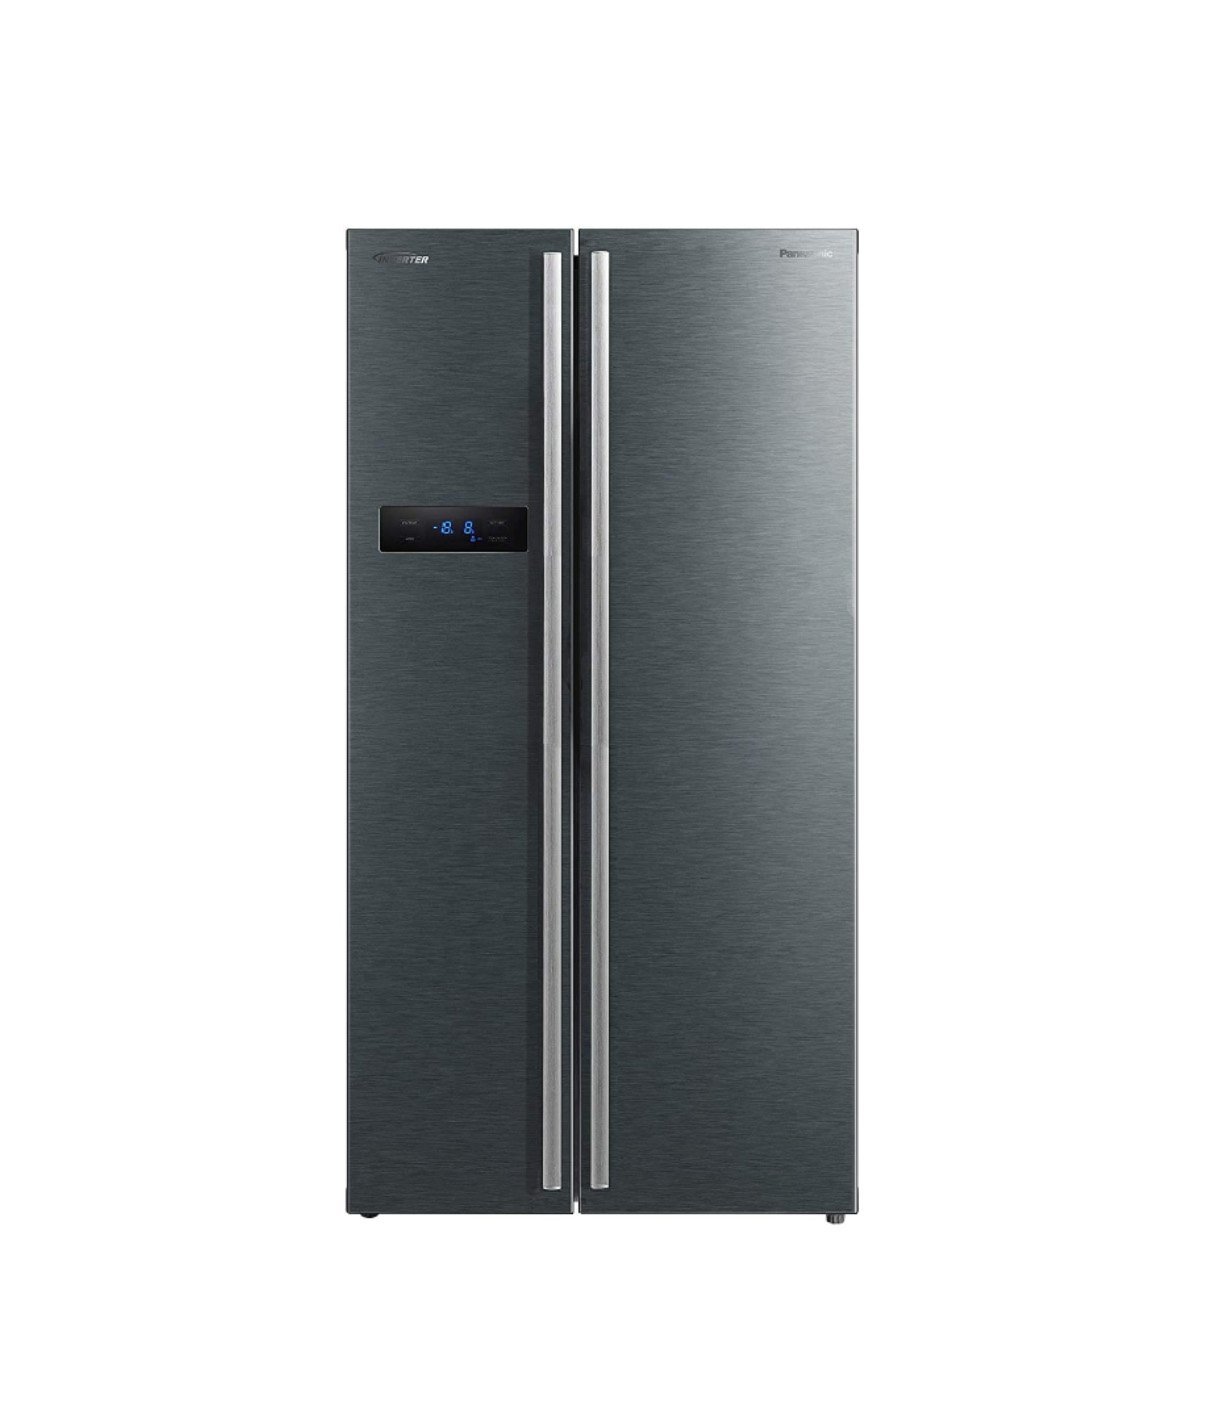 Panasonic 700 Liter Side By Side Refrigerator Dark Grey Model-NRBS700MS | 1 Year Full 10 Year Compressor Warranty.